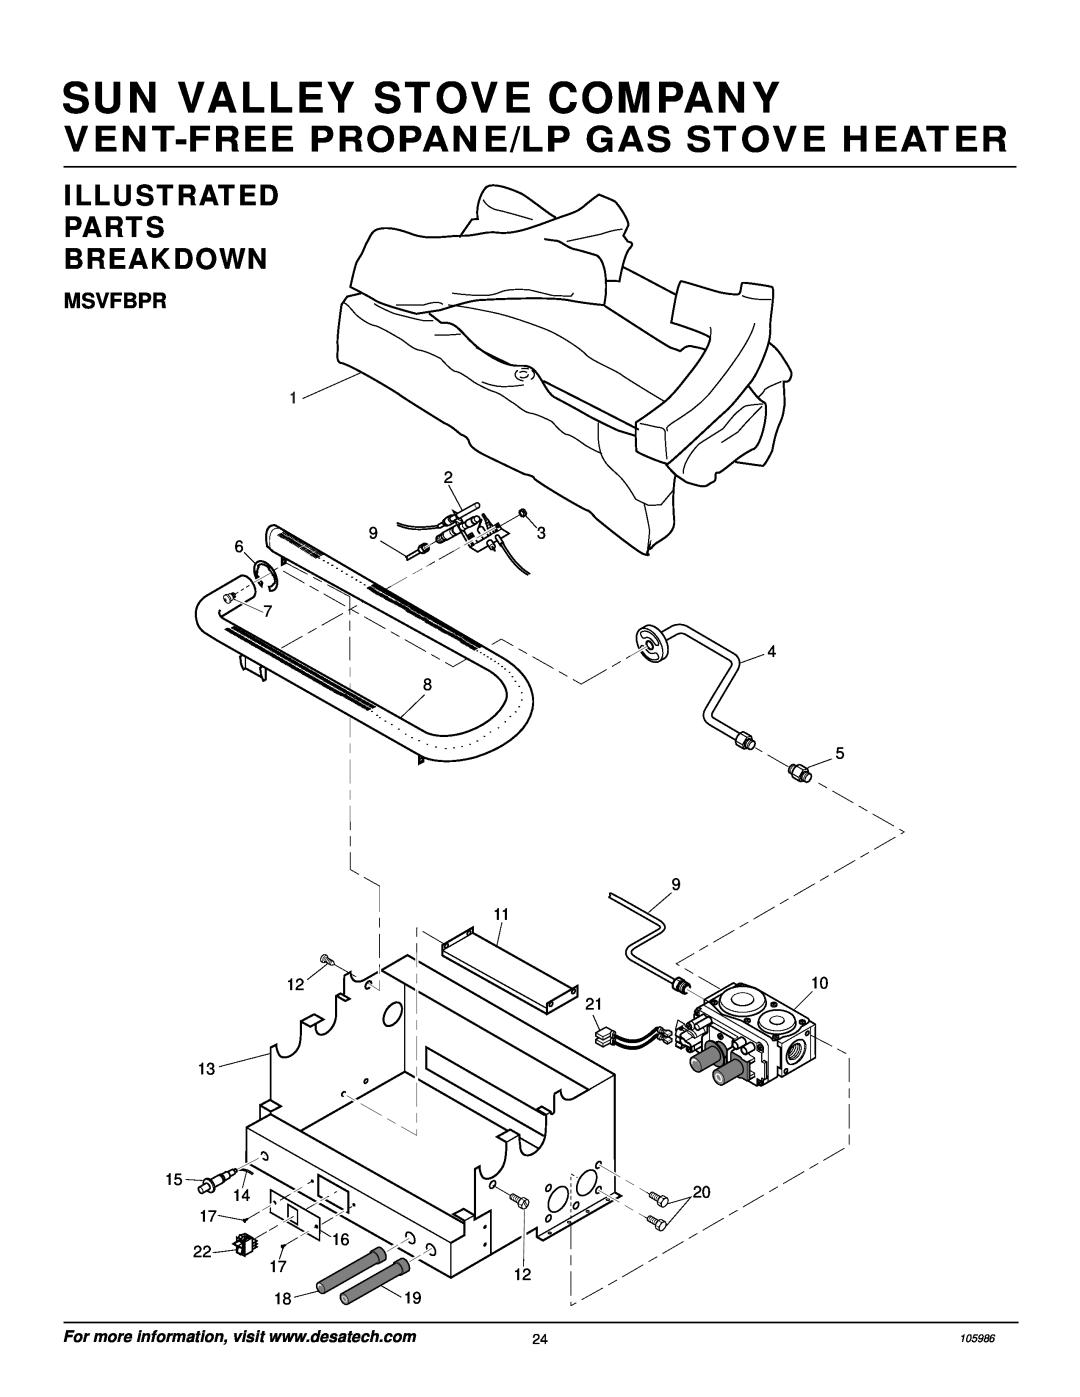 Desa MSVFBP Illustrated Parts Breakdown, Msvfbpr, Sun Valley Stove Company, Vent-Freepropane/Lp Gas Stove Heater, 105986 